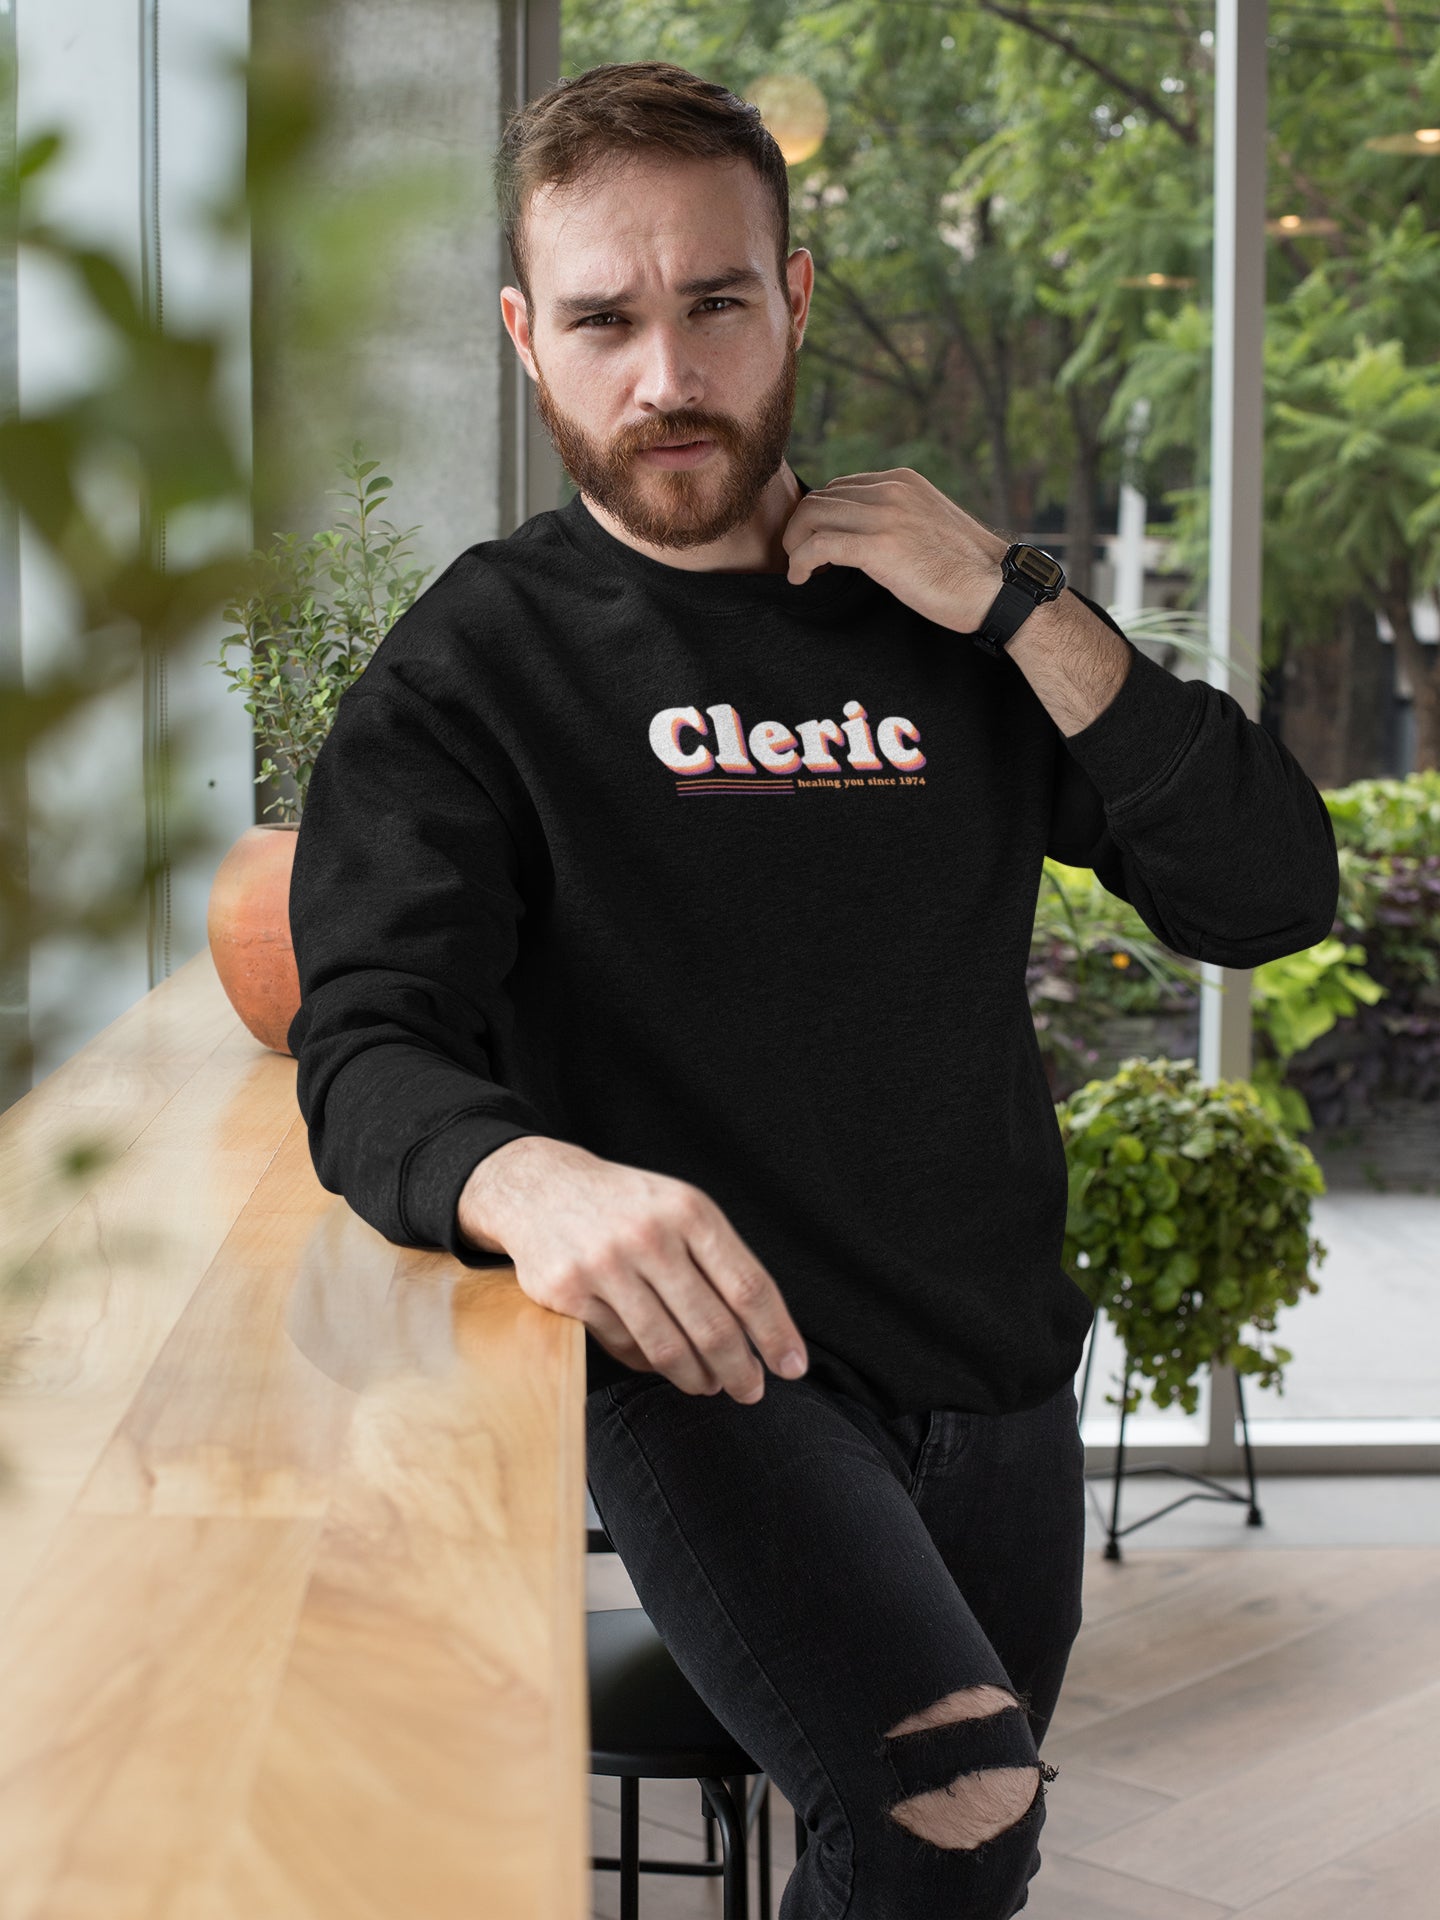 Cleric - Kicking it Old School Unisex Sweatshirts